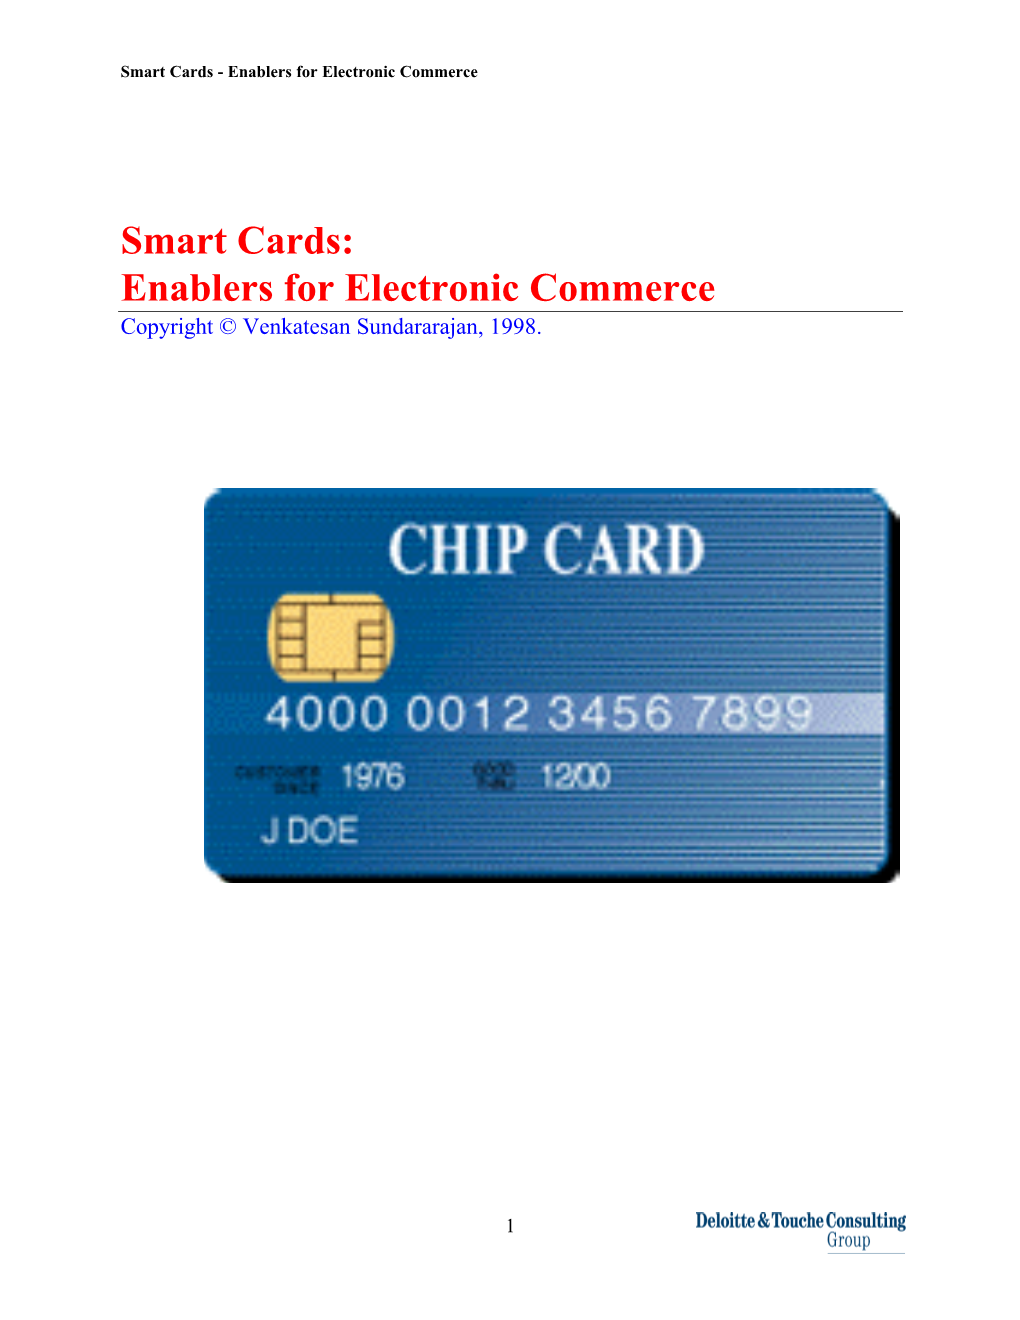 Smart Cards: Enablers for Electronic Commerce Copyright © Venkatesan Sundararajan, 1998